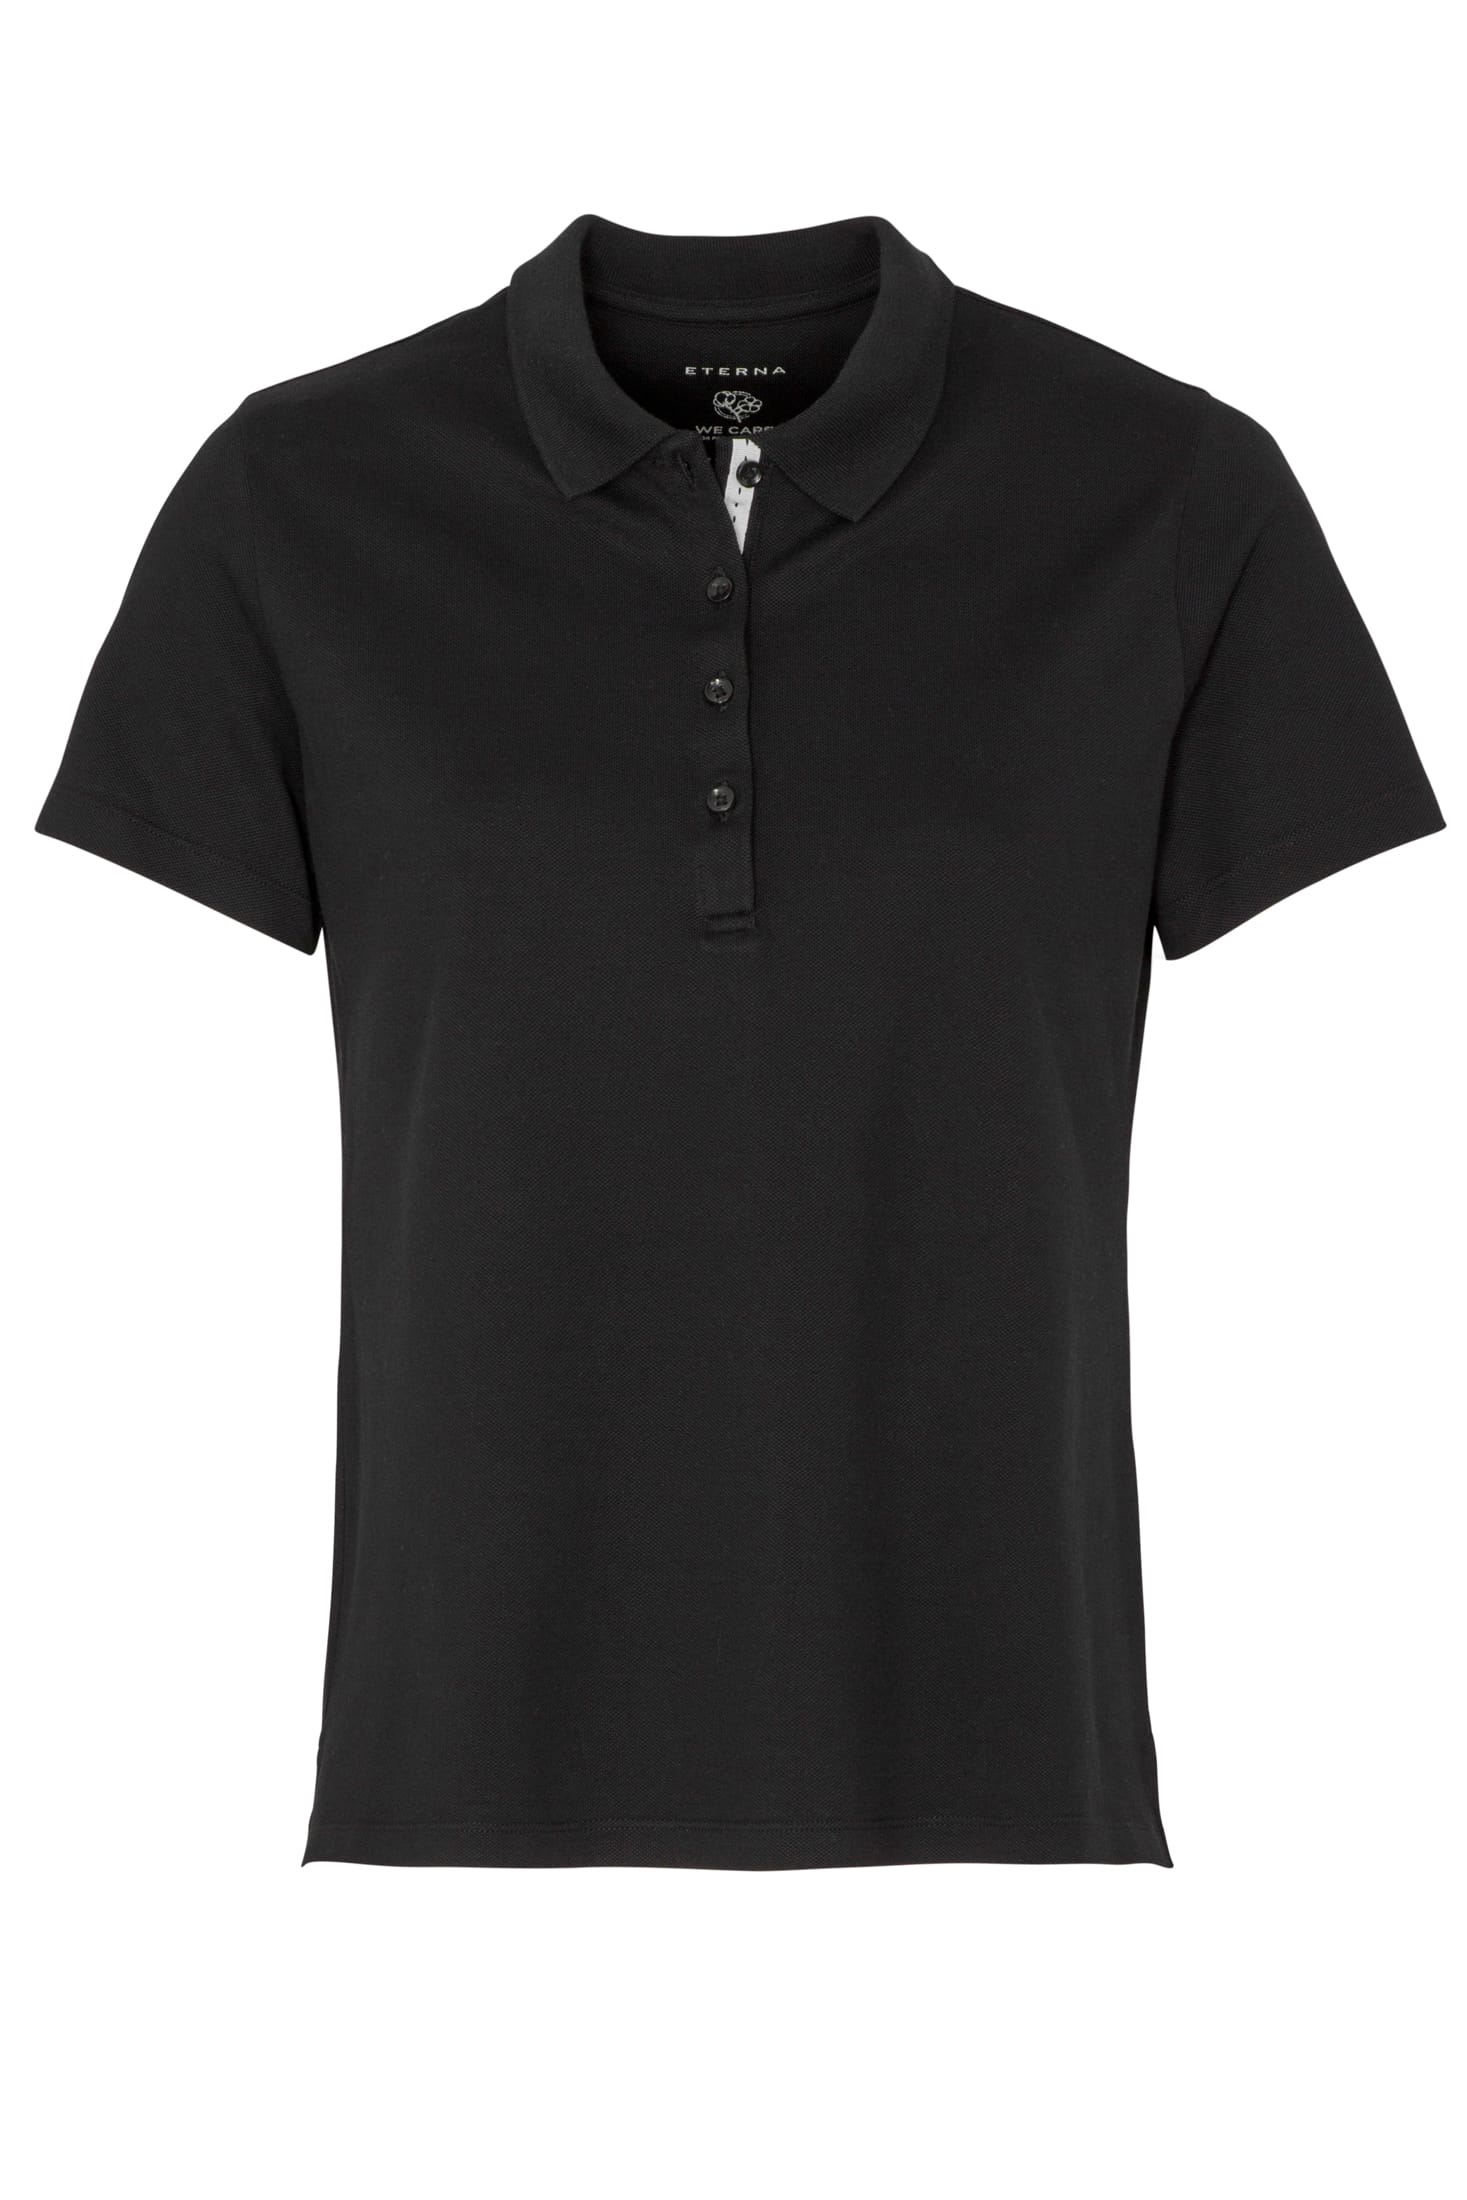 Bekleidung schwarz | CLASSIC Poloshirts ETERNA | | 5535-39-H530 Jeans-Manufaktur Damen FIT Poloshirt | pique Eterna